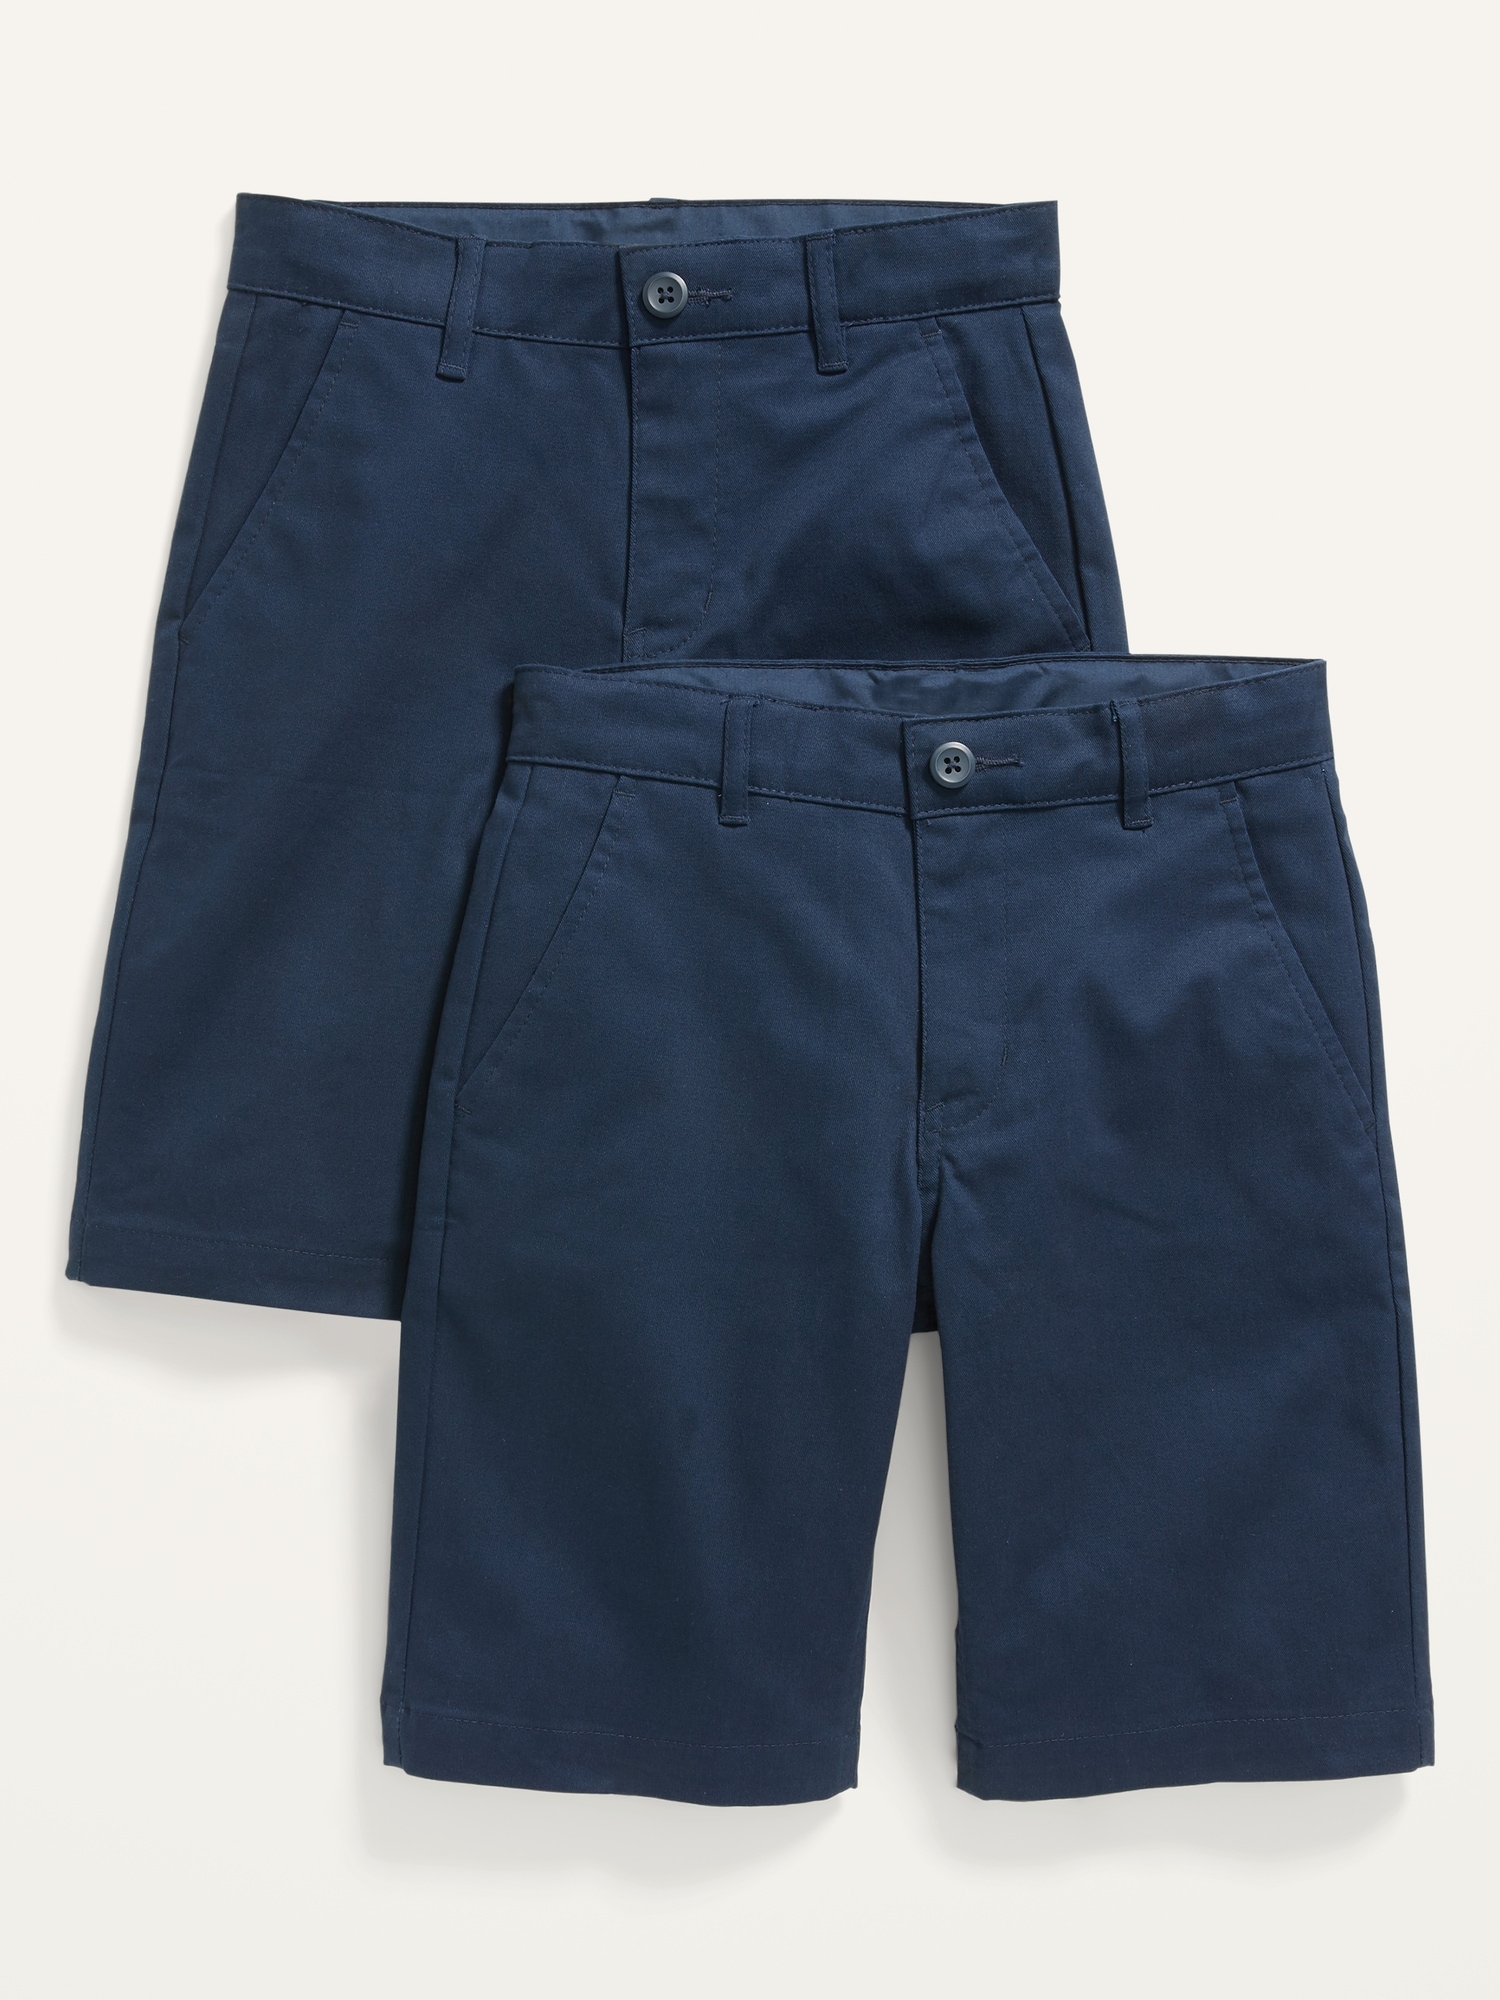 Knee Length Uniform Shorts 2-Pack for Boys